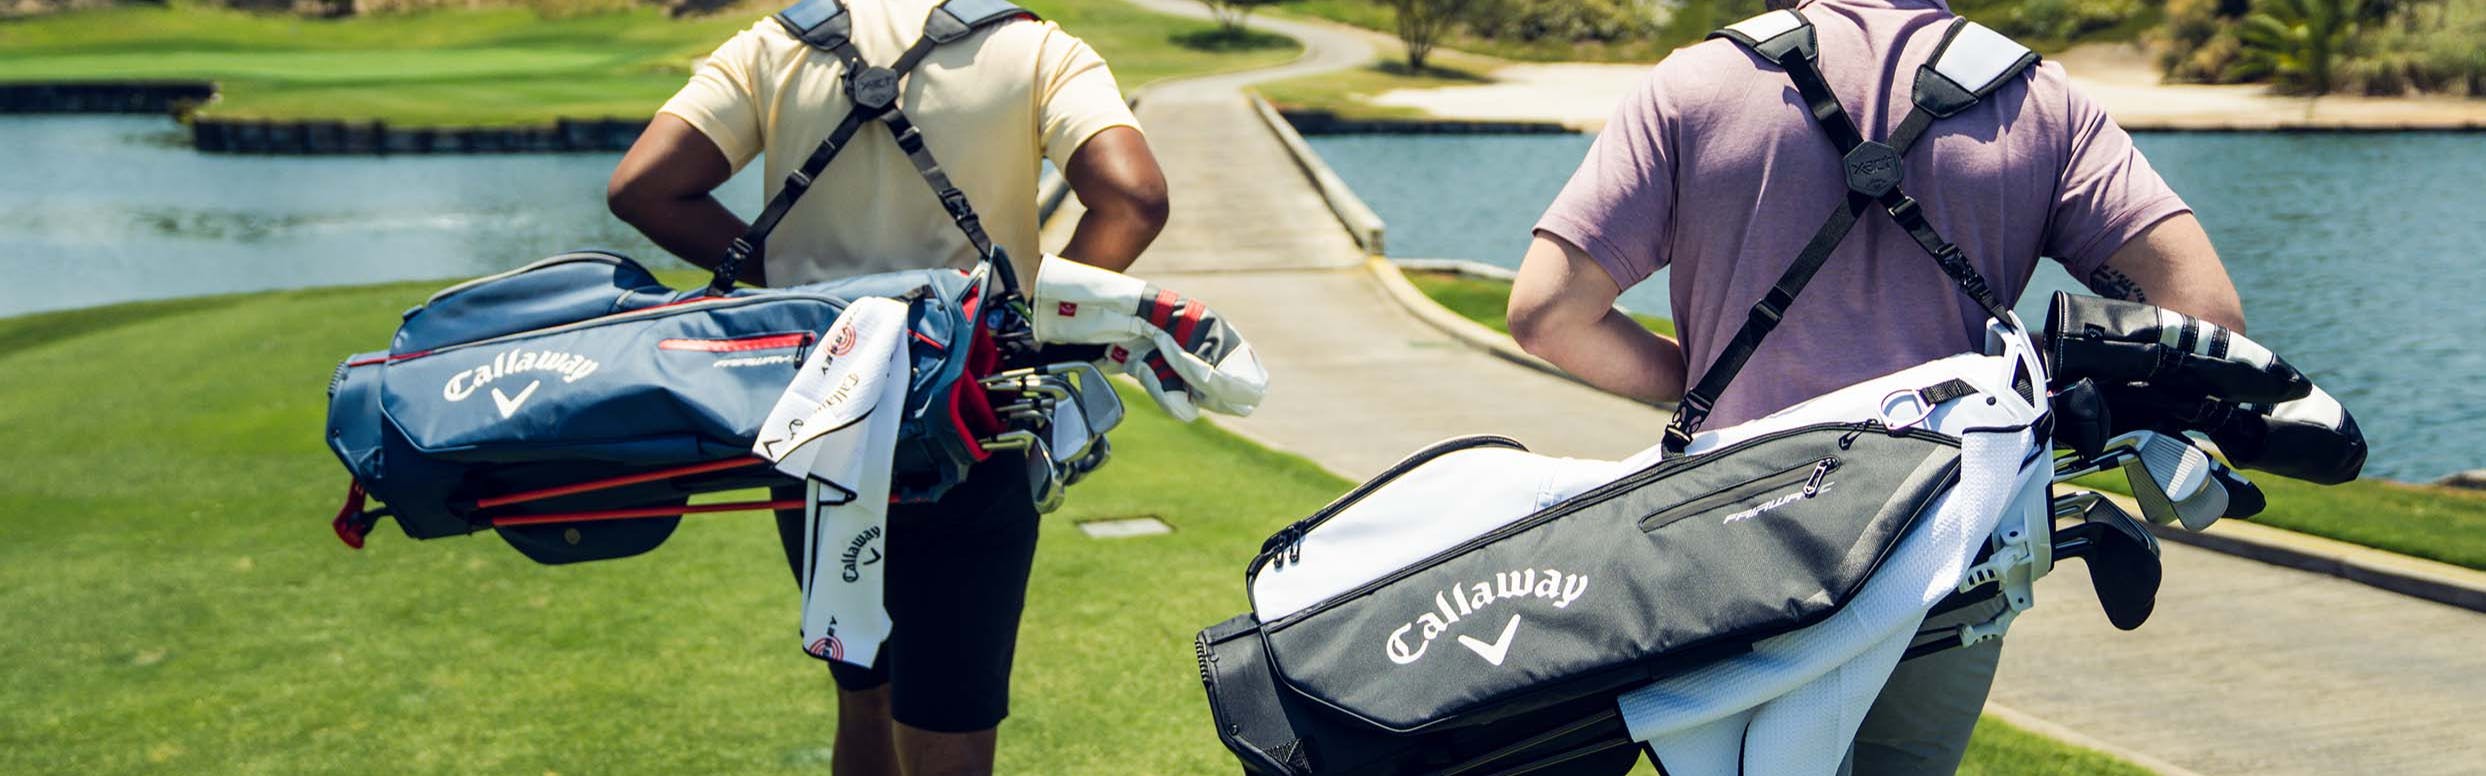 Callaway Golf Bags: How to Choose